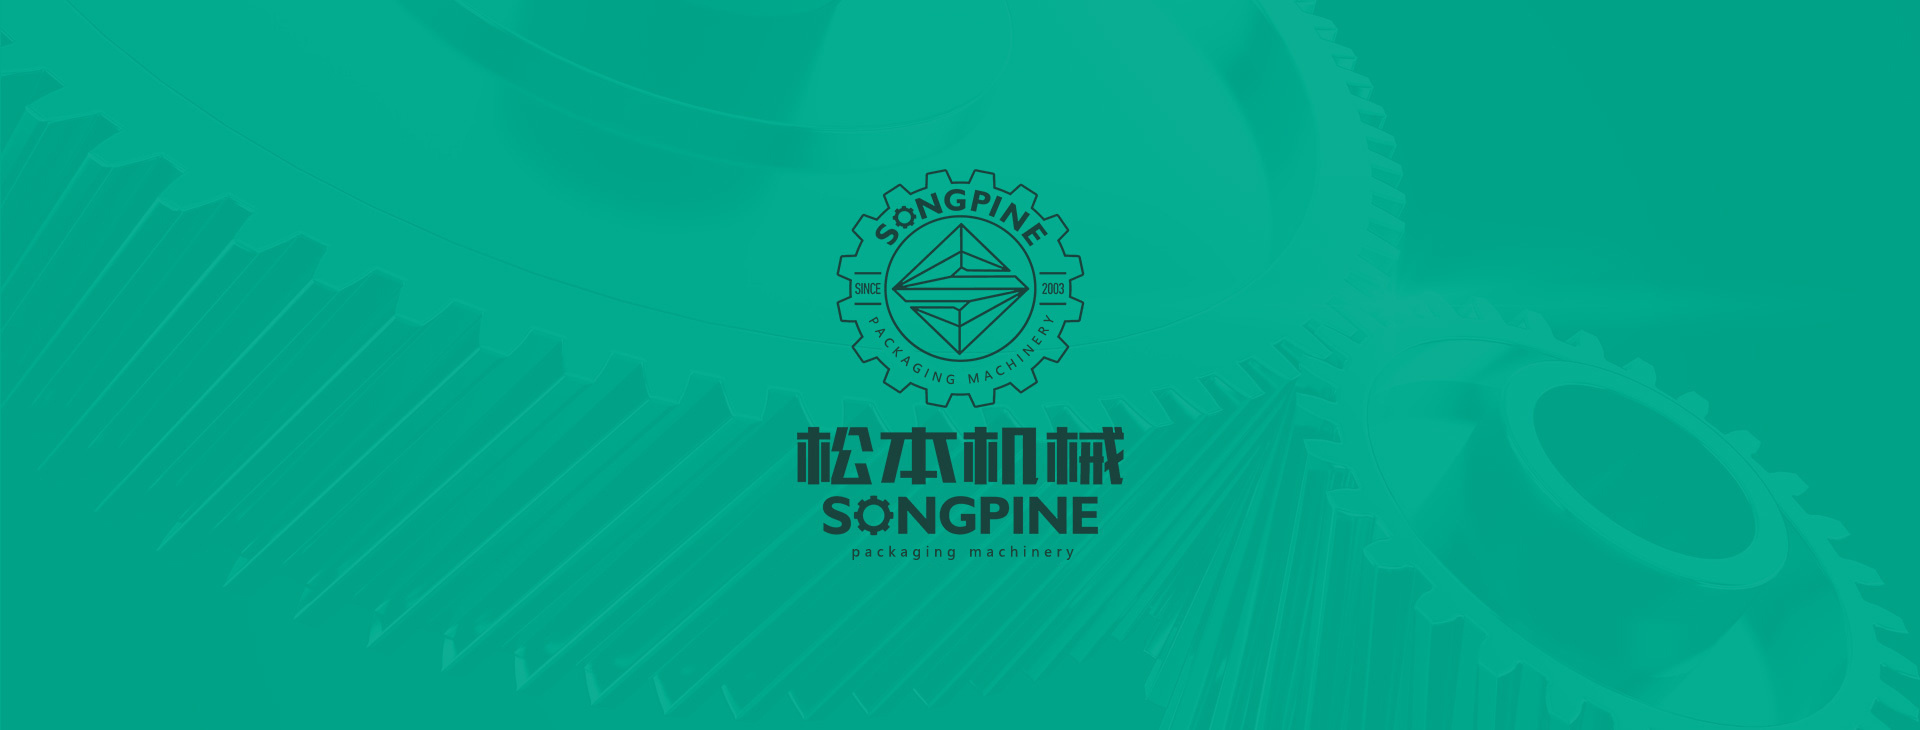 Qingdao Songben Packaging Machinery Co., Ltd